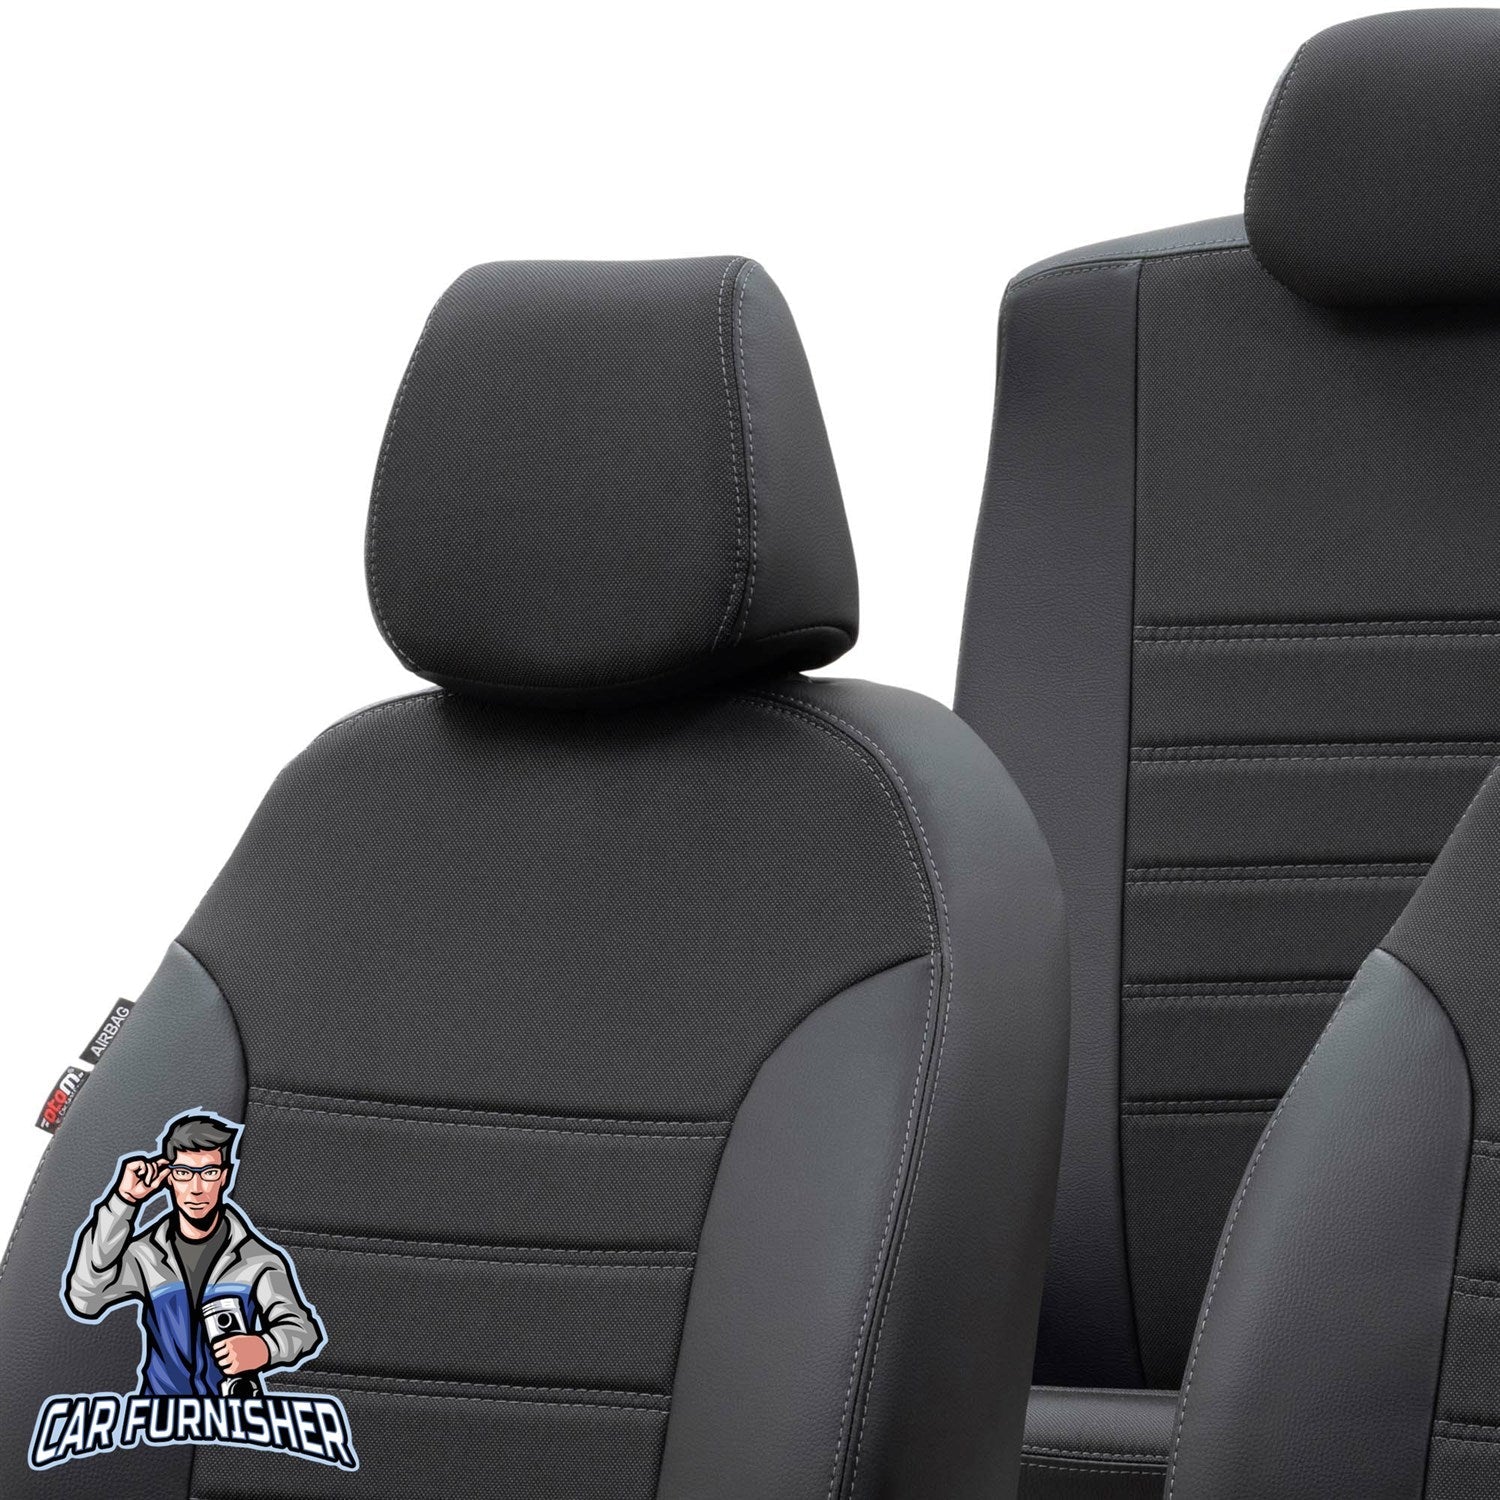 Volvo S80 Seat Cover Paris Leather & Jacquard Design Beige Leather & Jacquard Fabric